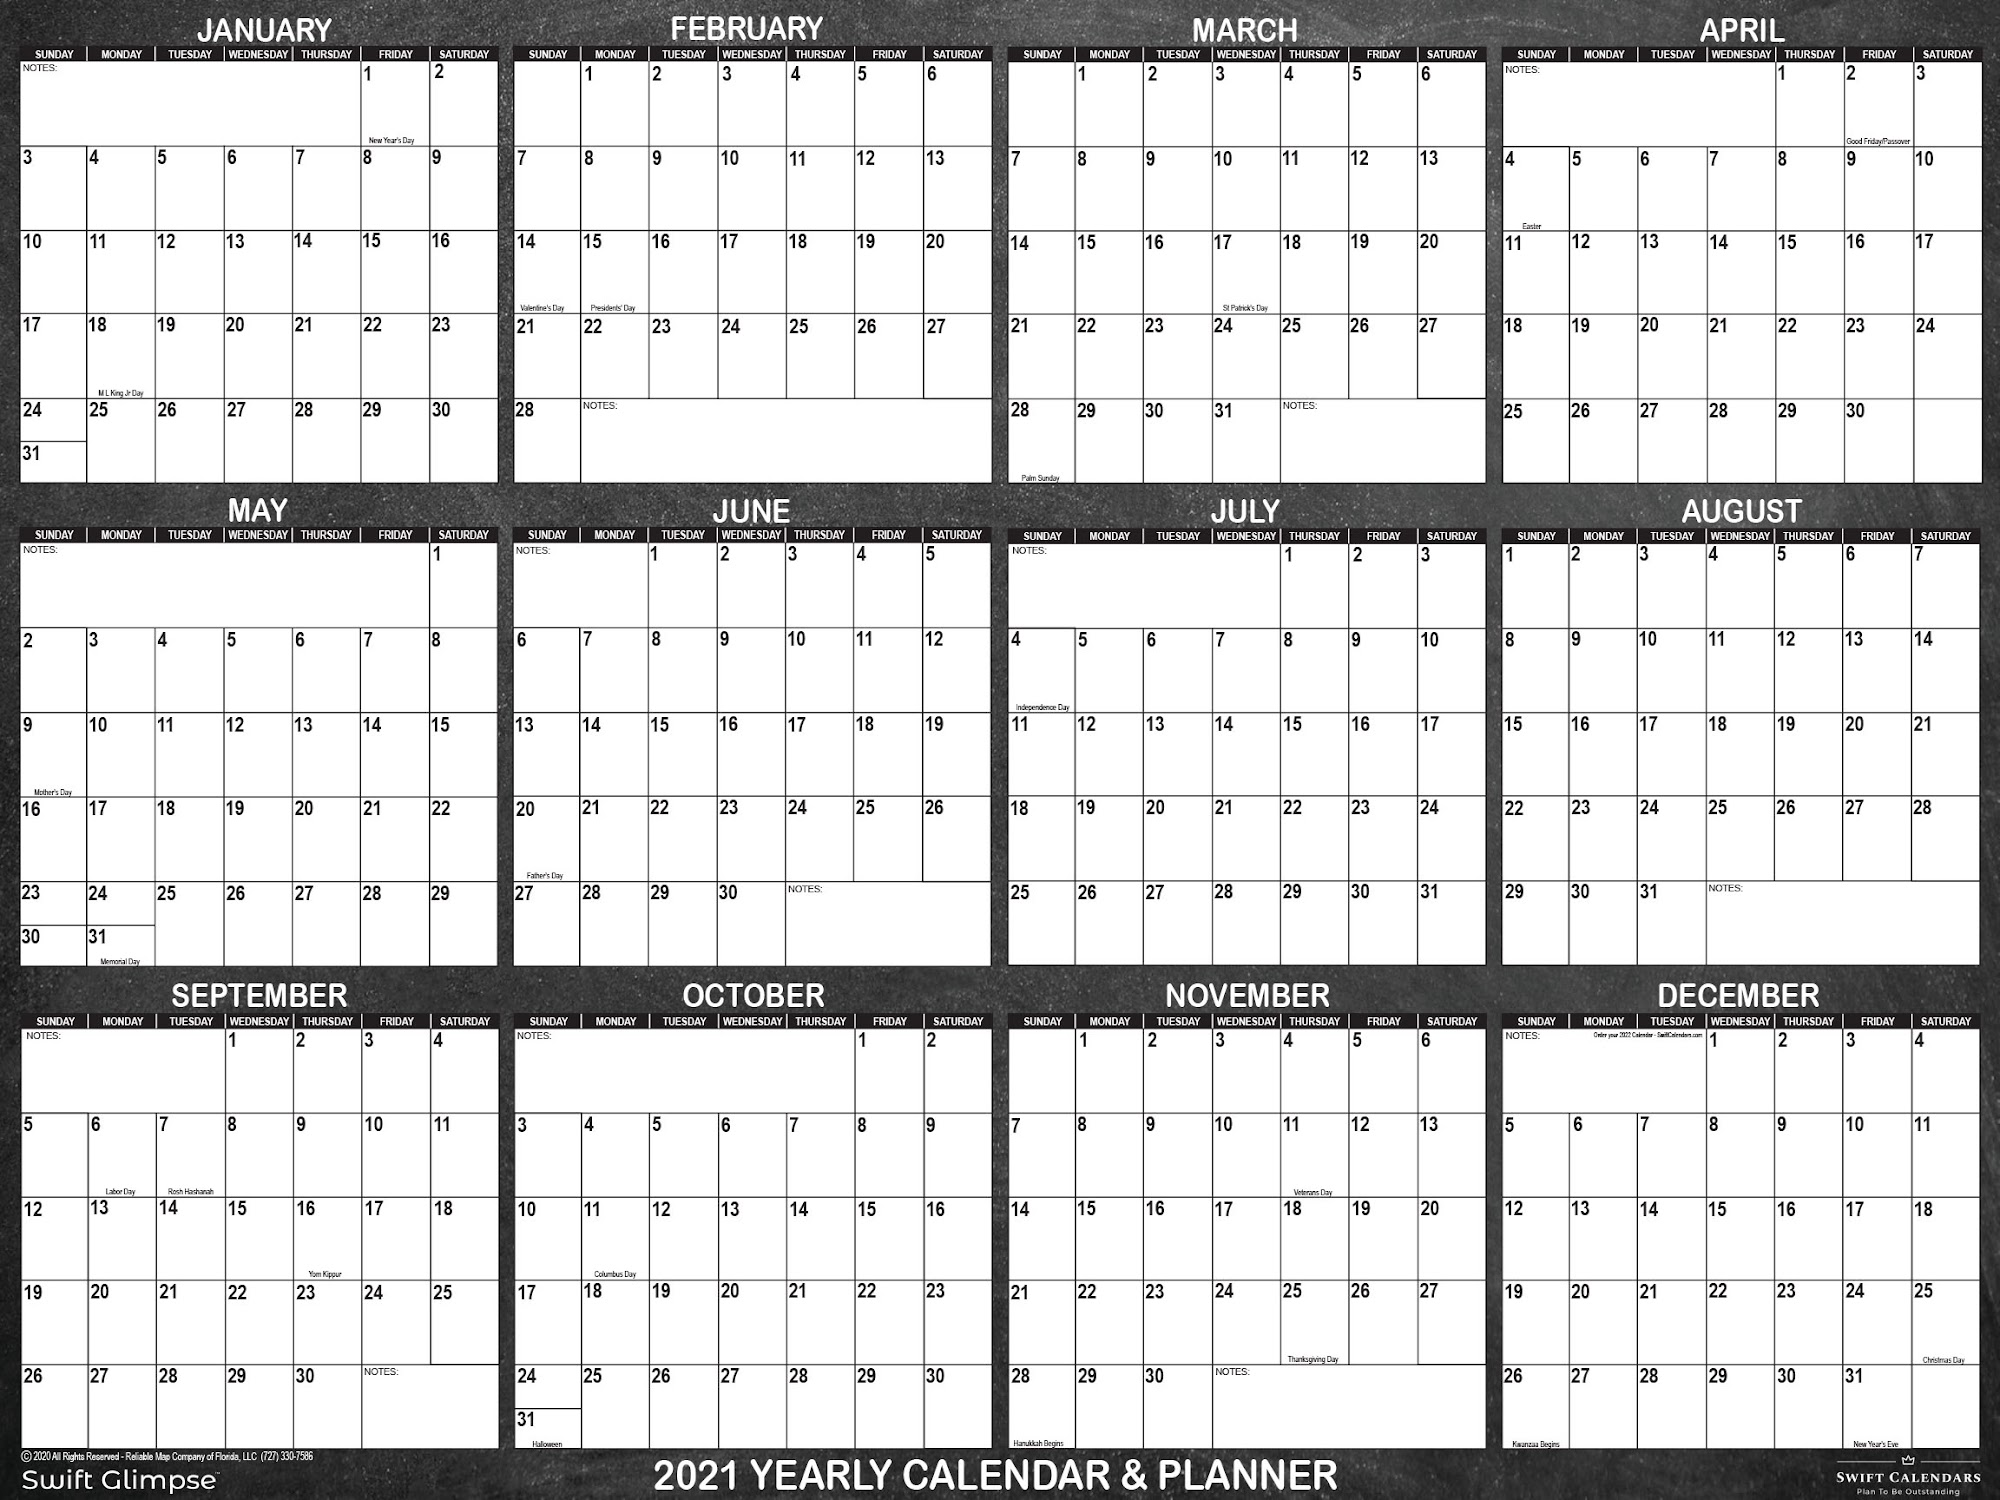 SwiftMaps | Swift Calendars